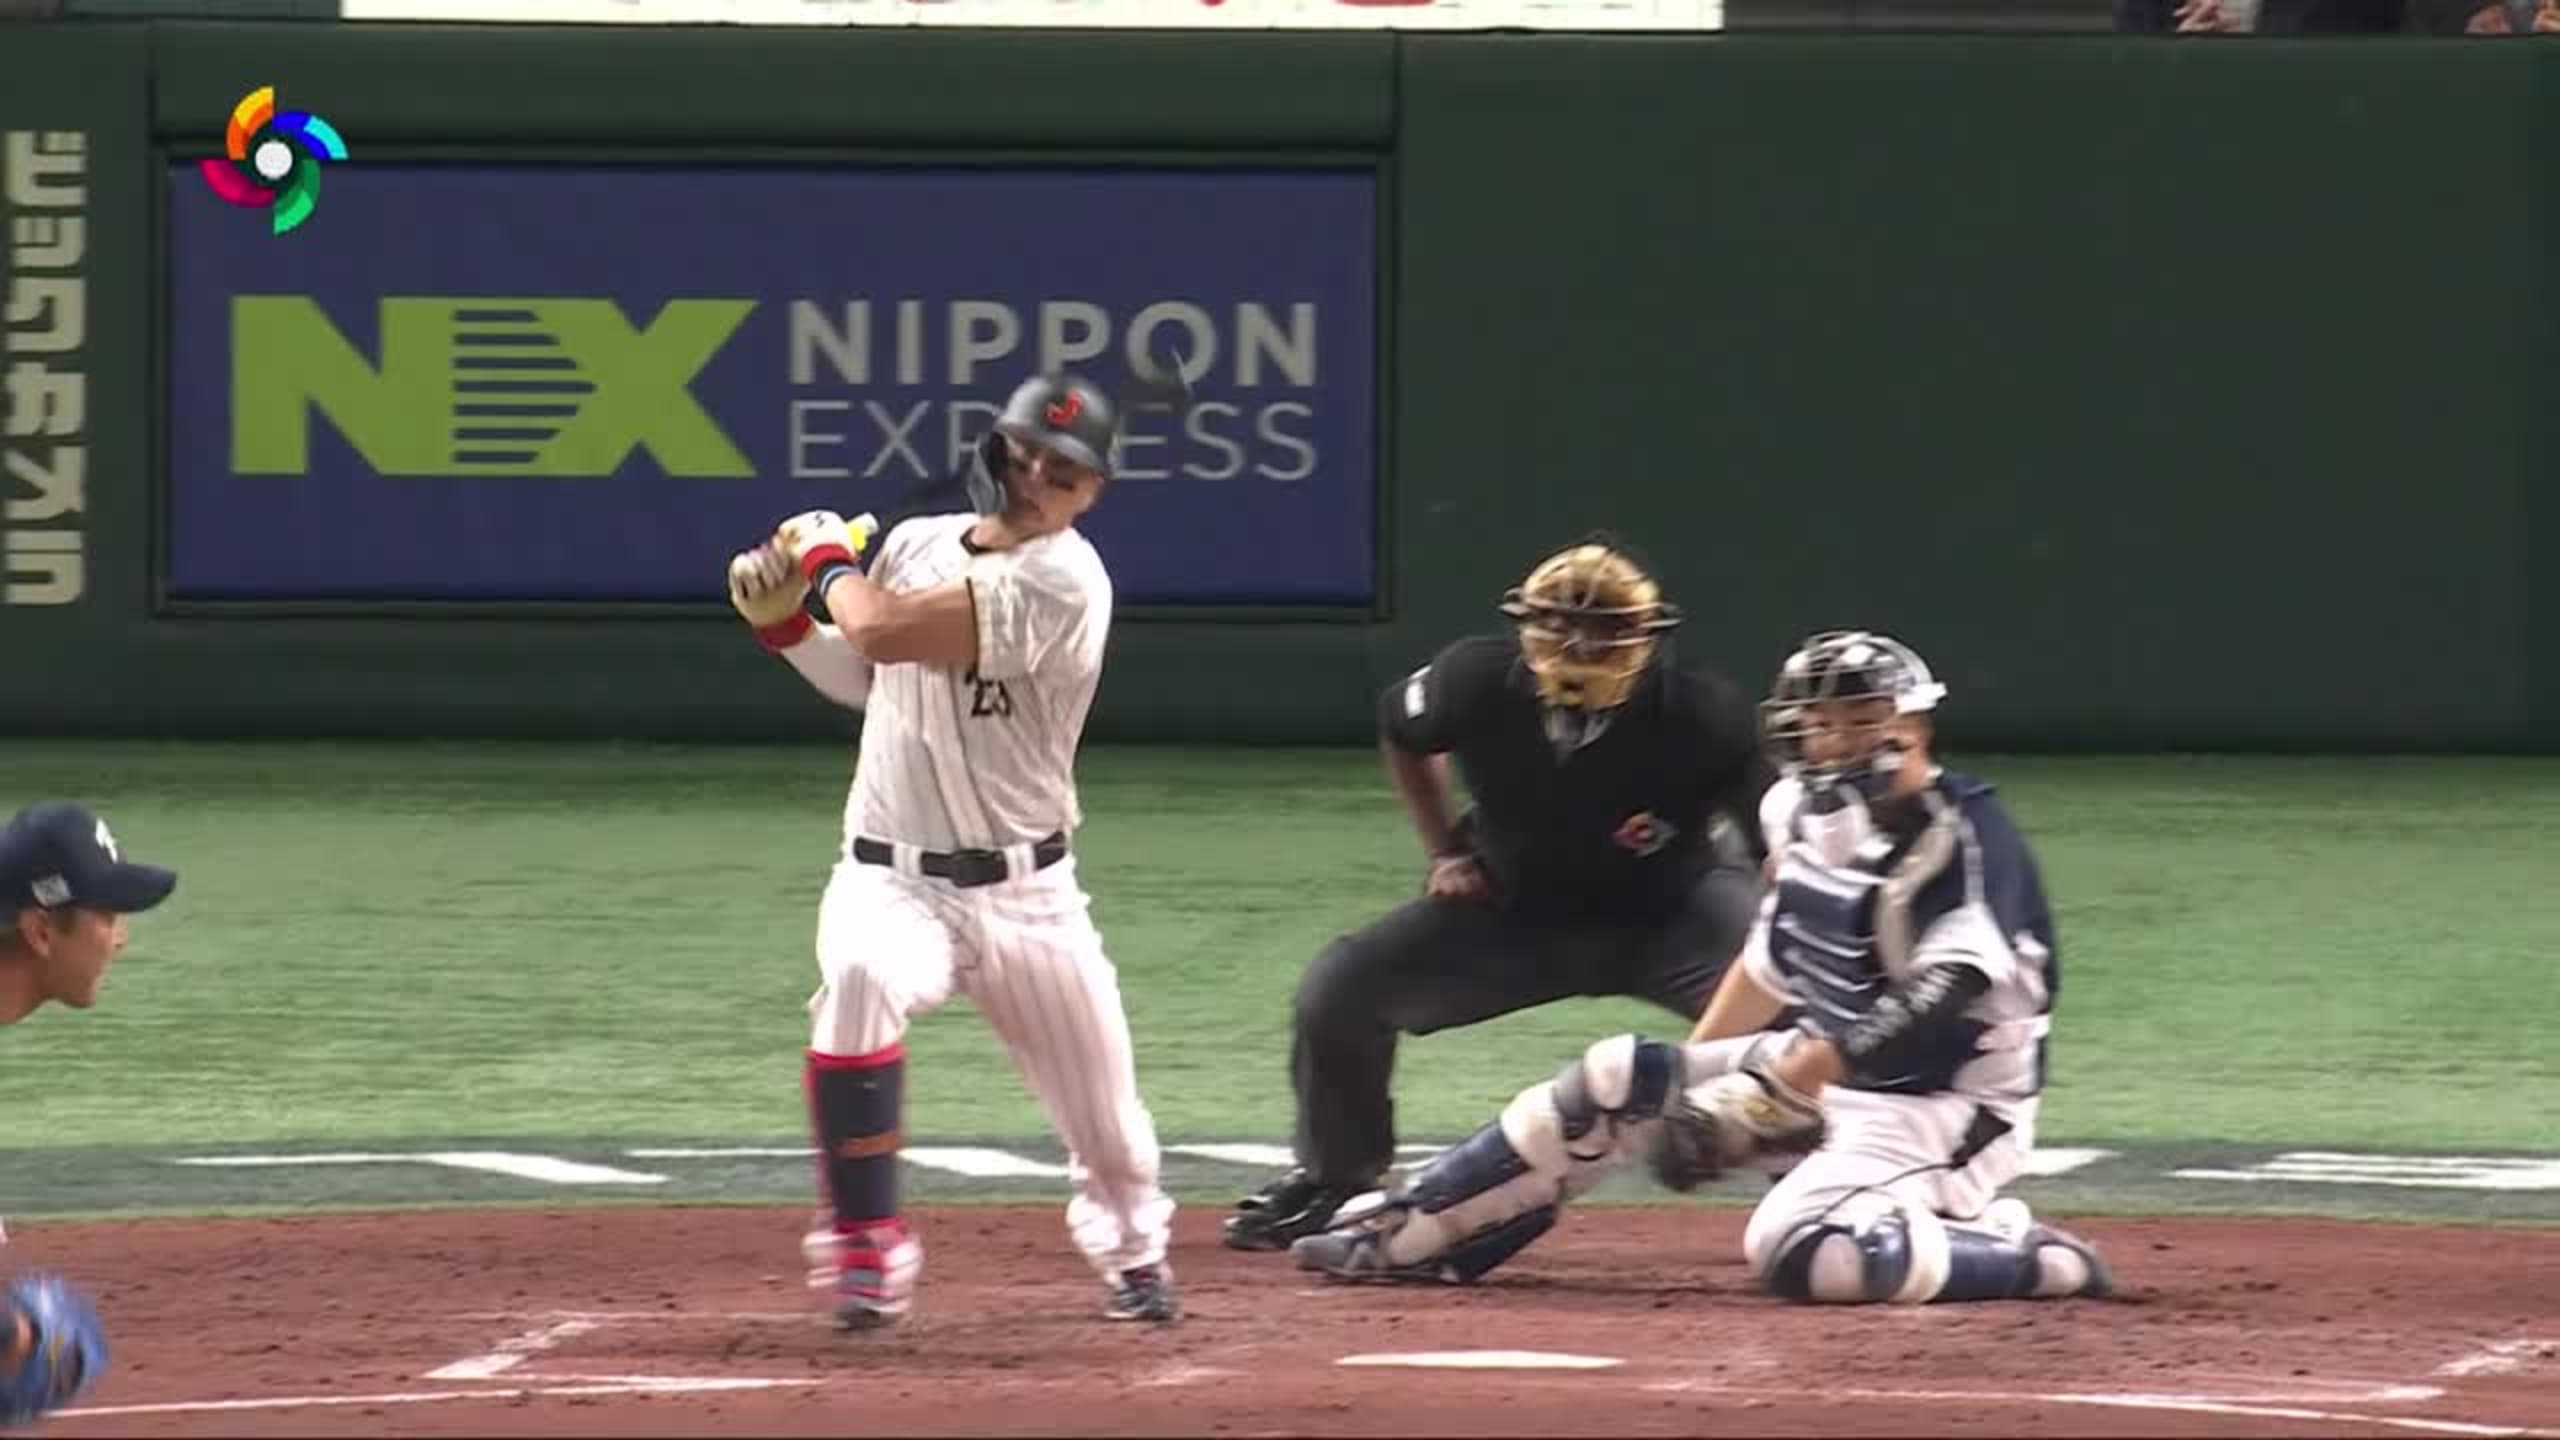 Team Japan says goodbye to Lars Nootbaar : r/baseball